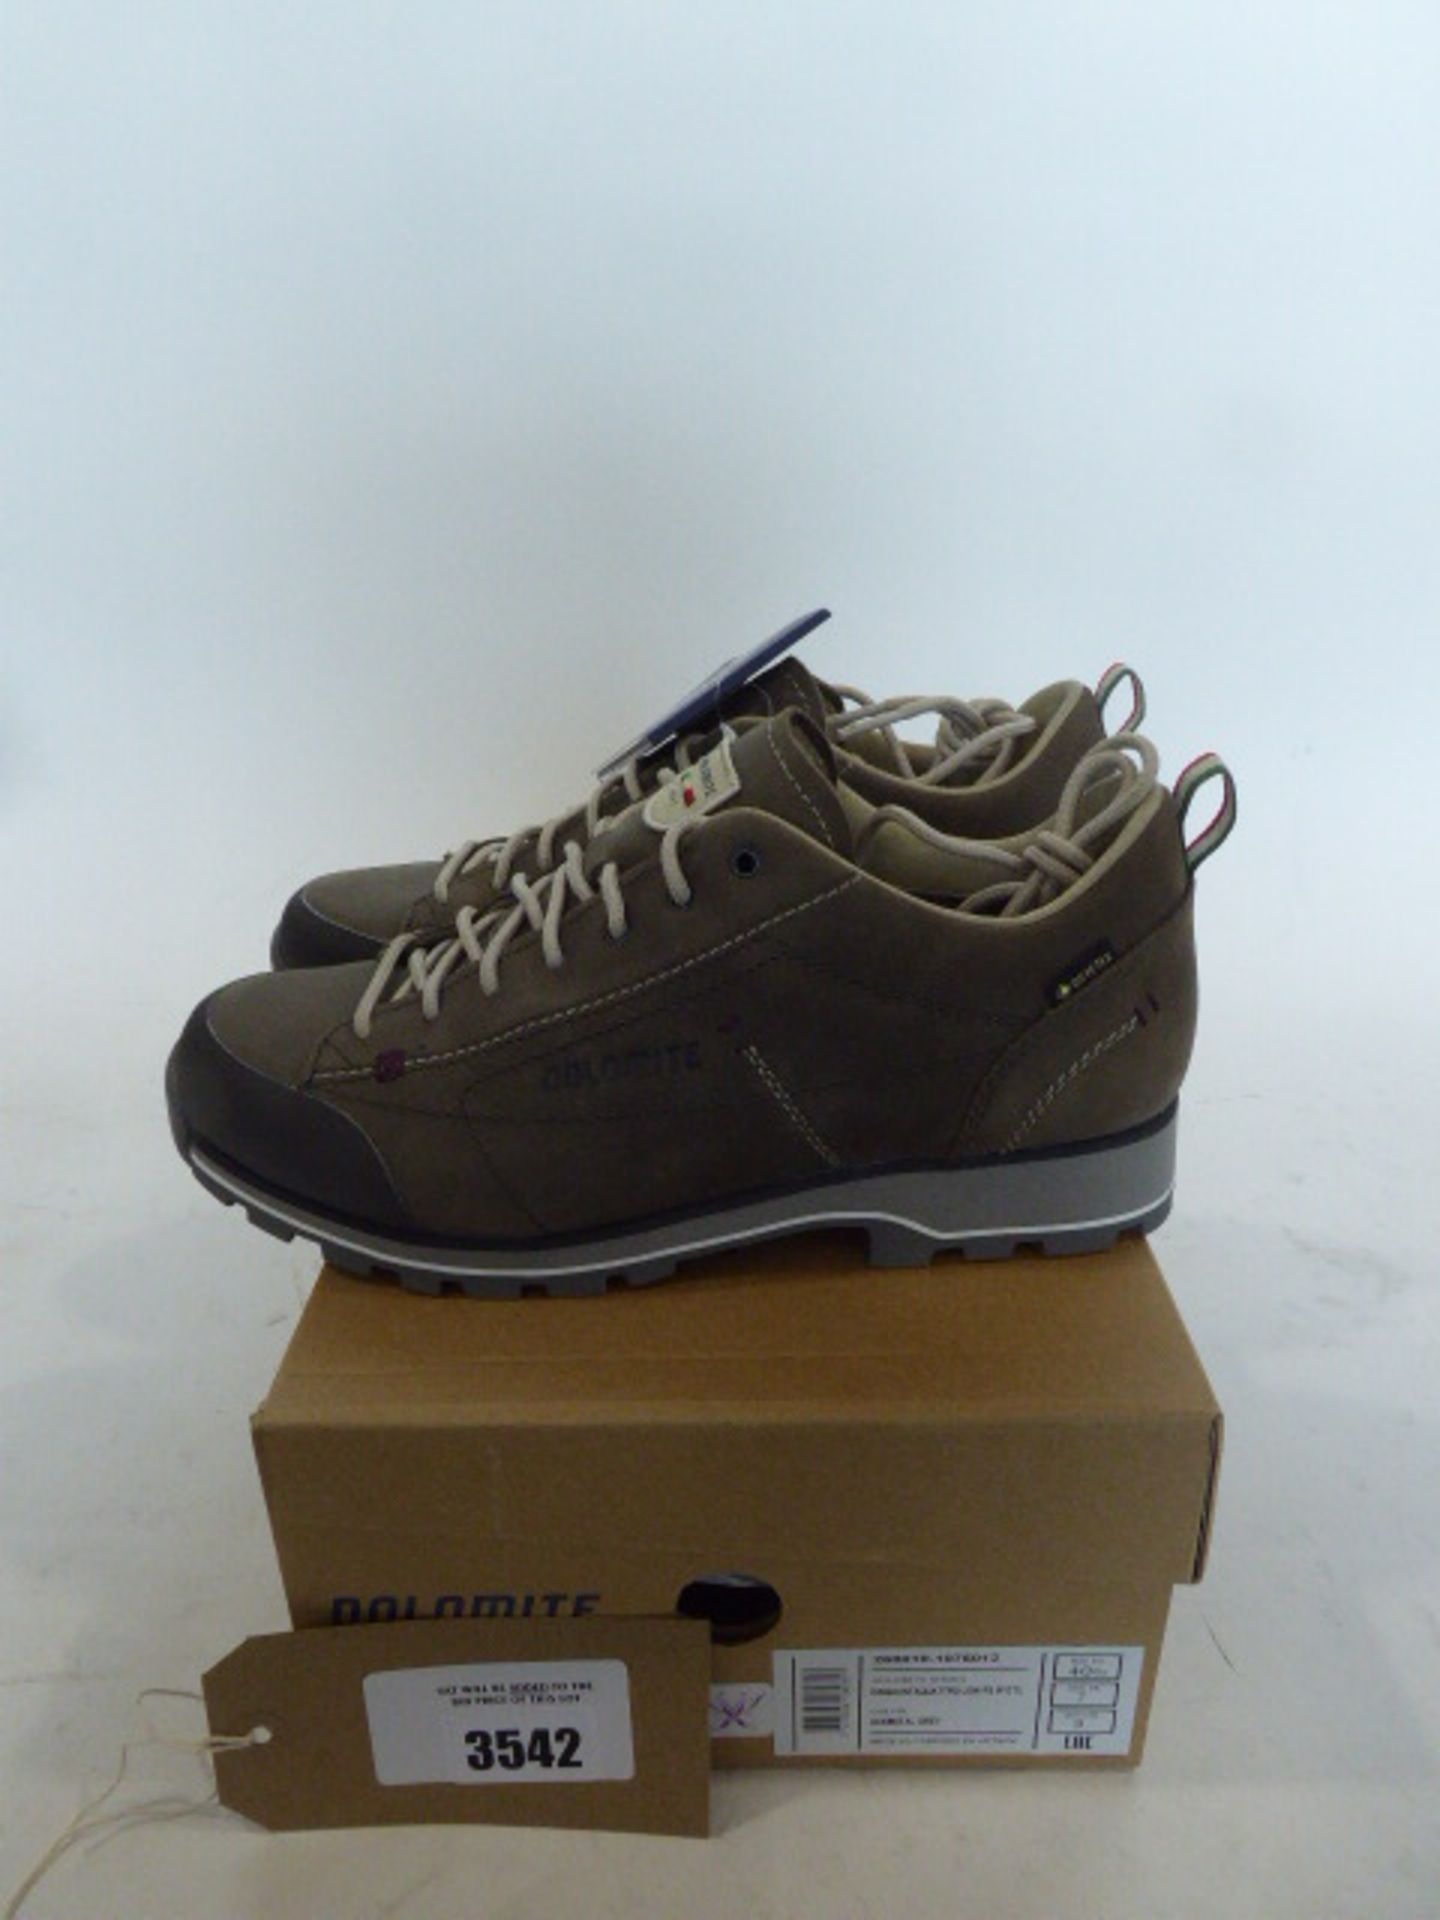 Dolomite 54 Low FG Goretex walking shoes size 7